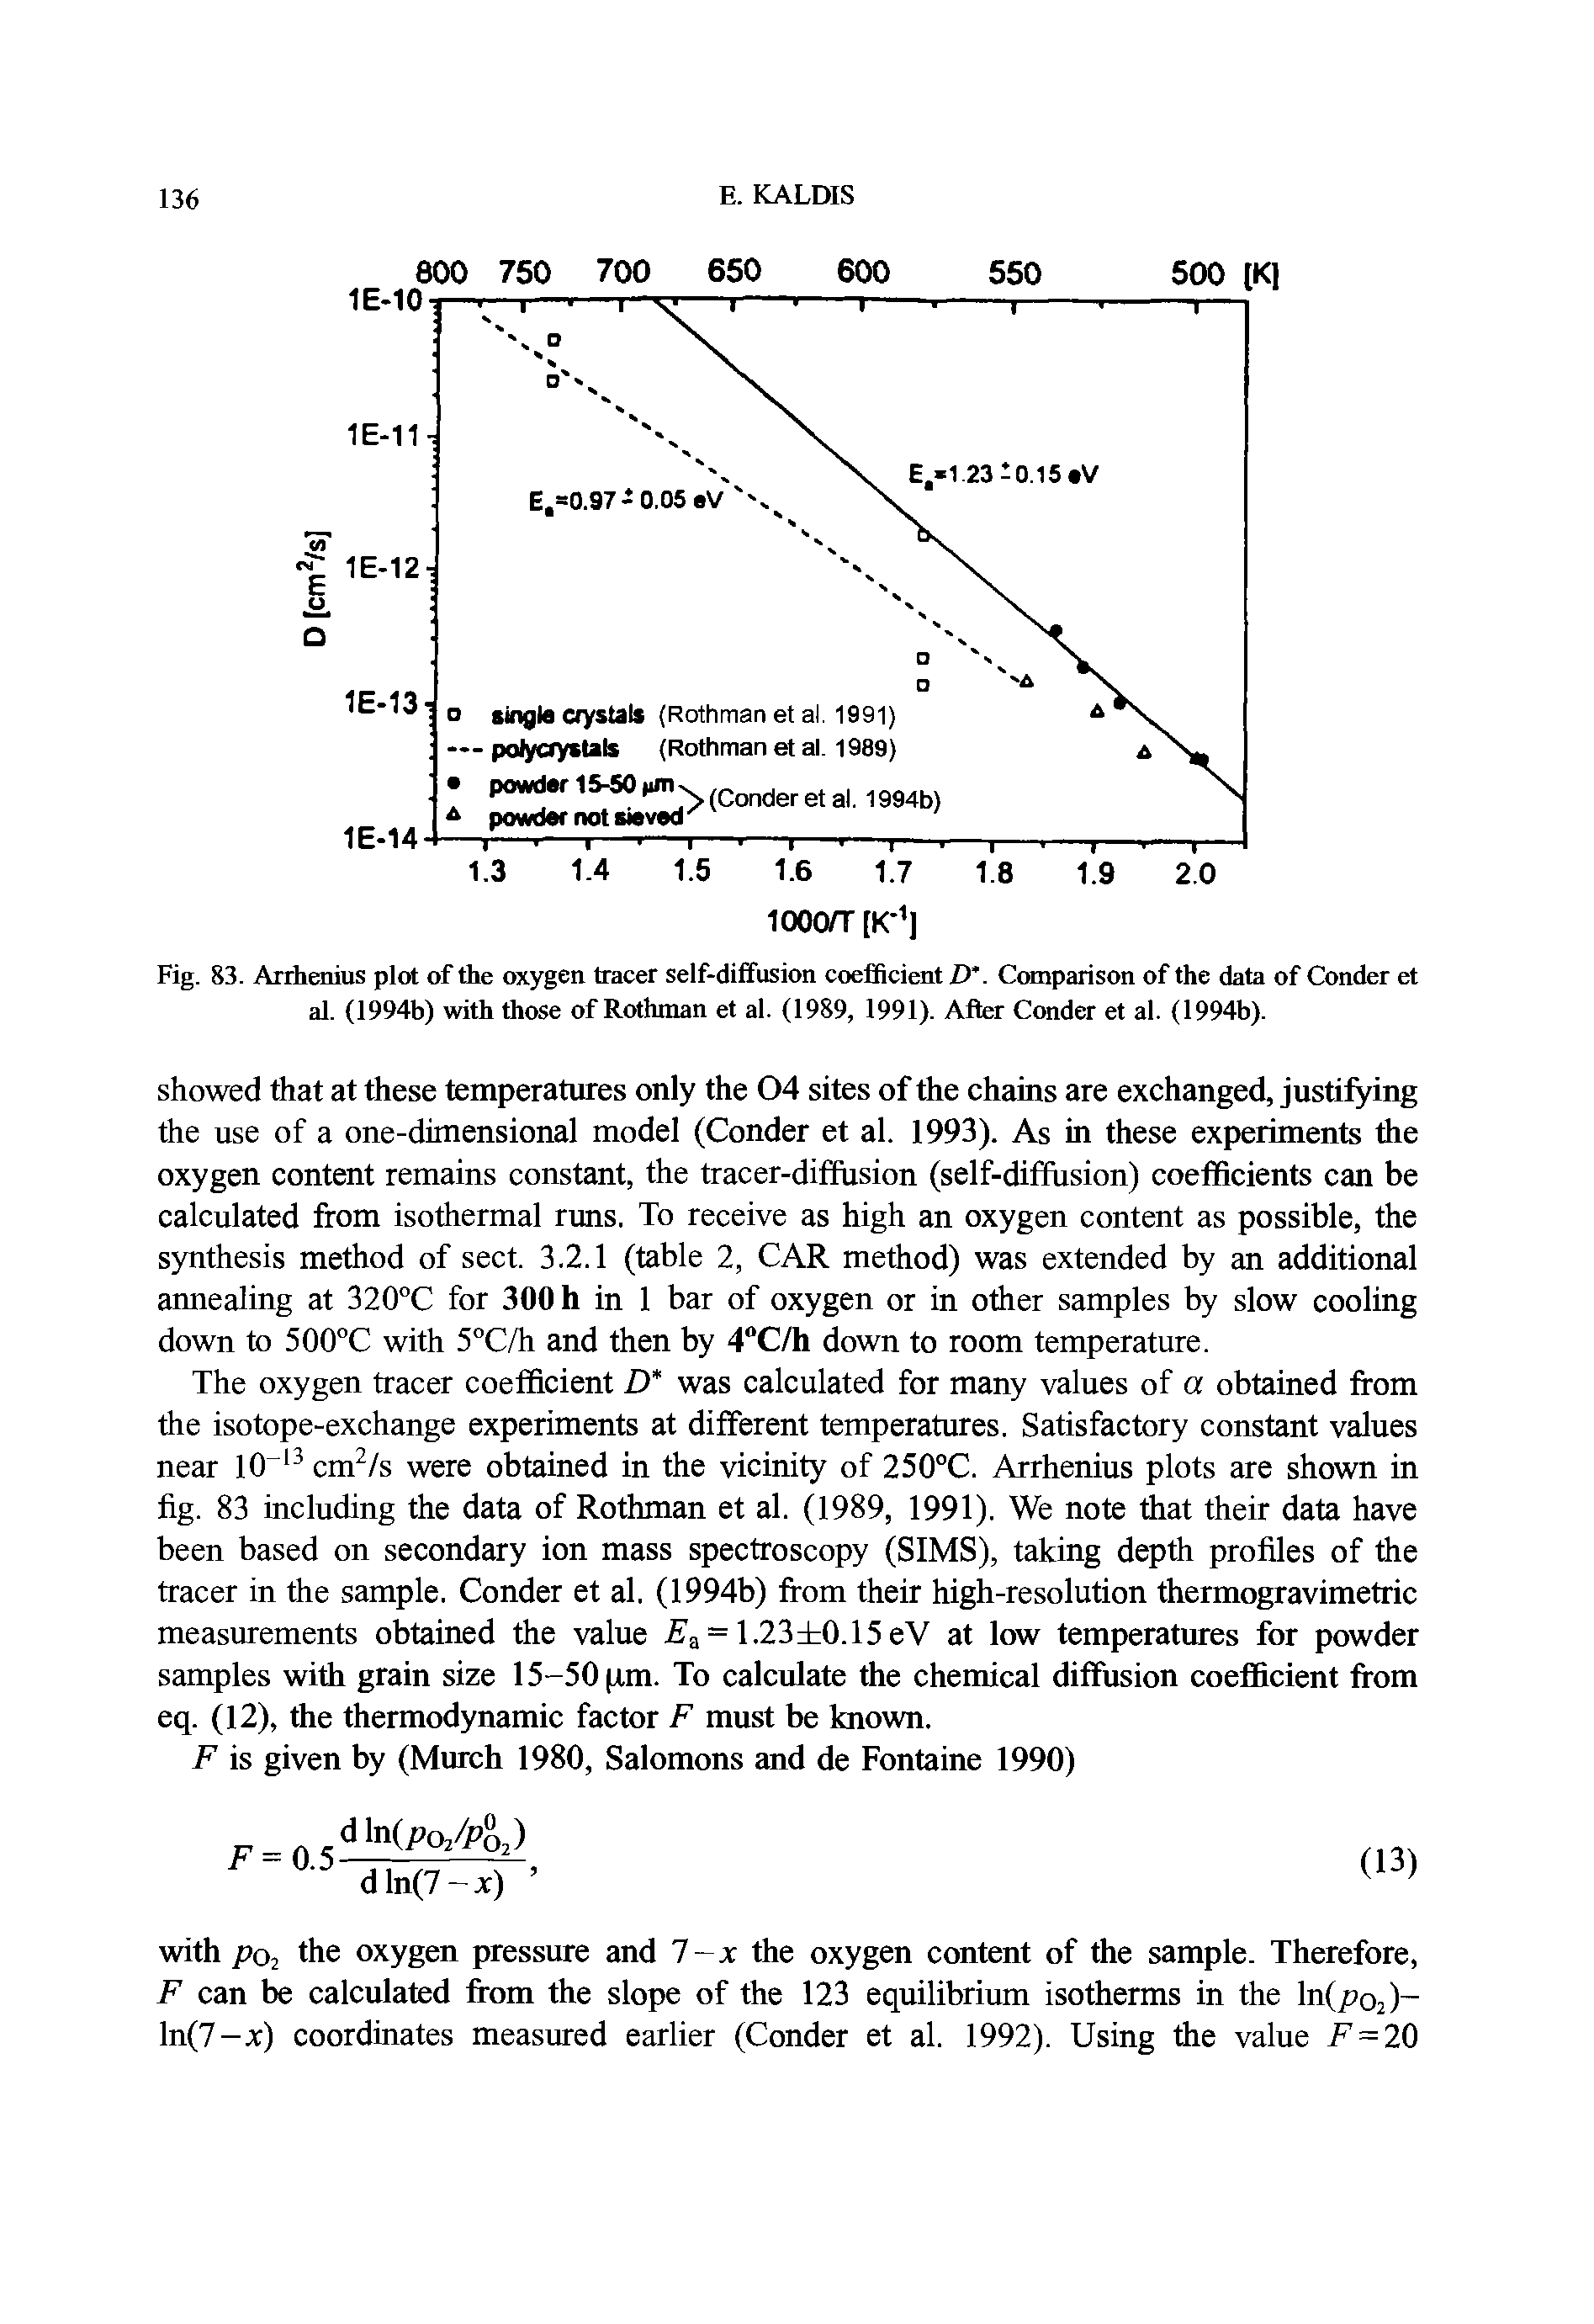 Fig. 83. Arrhenius plot of the oxygen tracer self-diffusion coefficient Z>. Comparison of the data of Conder et al. (1994b) with those of Rothman et al. (1989, 1991). After Conder et al. (1994b).